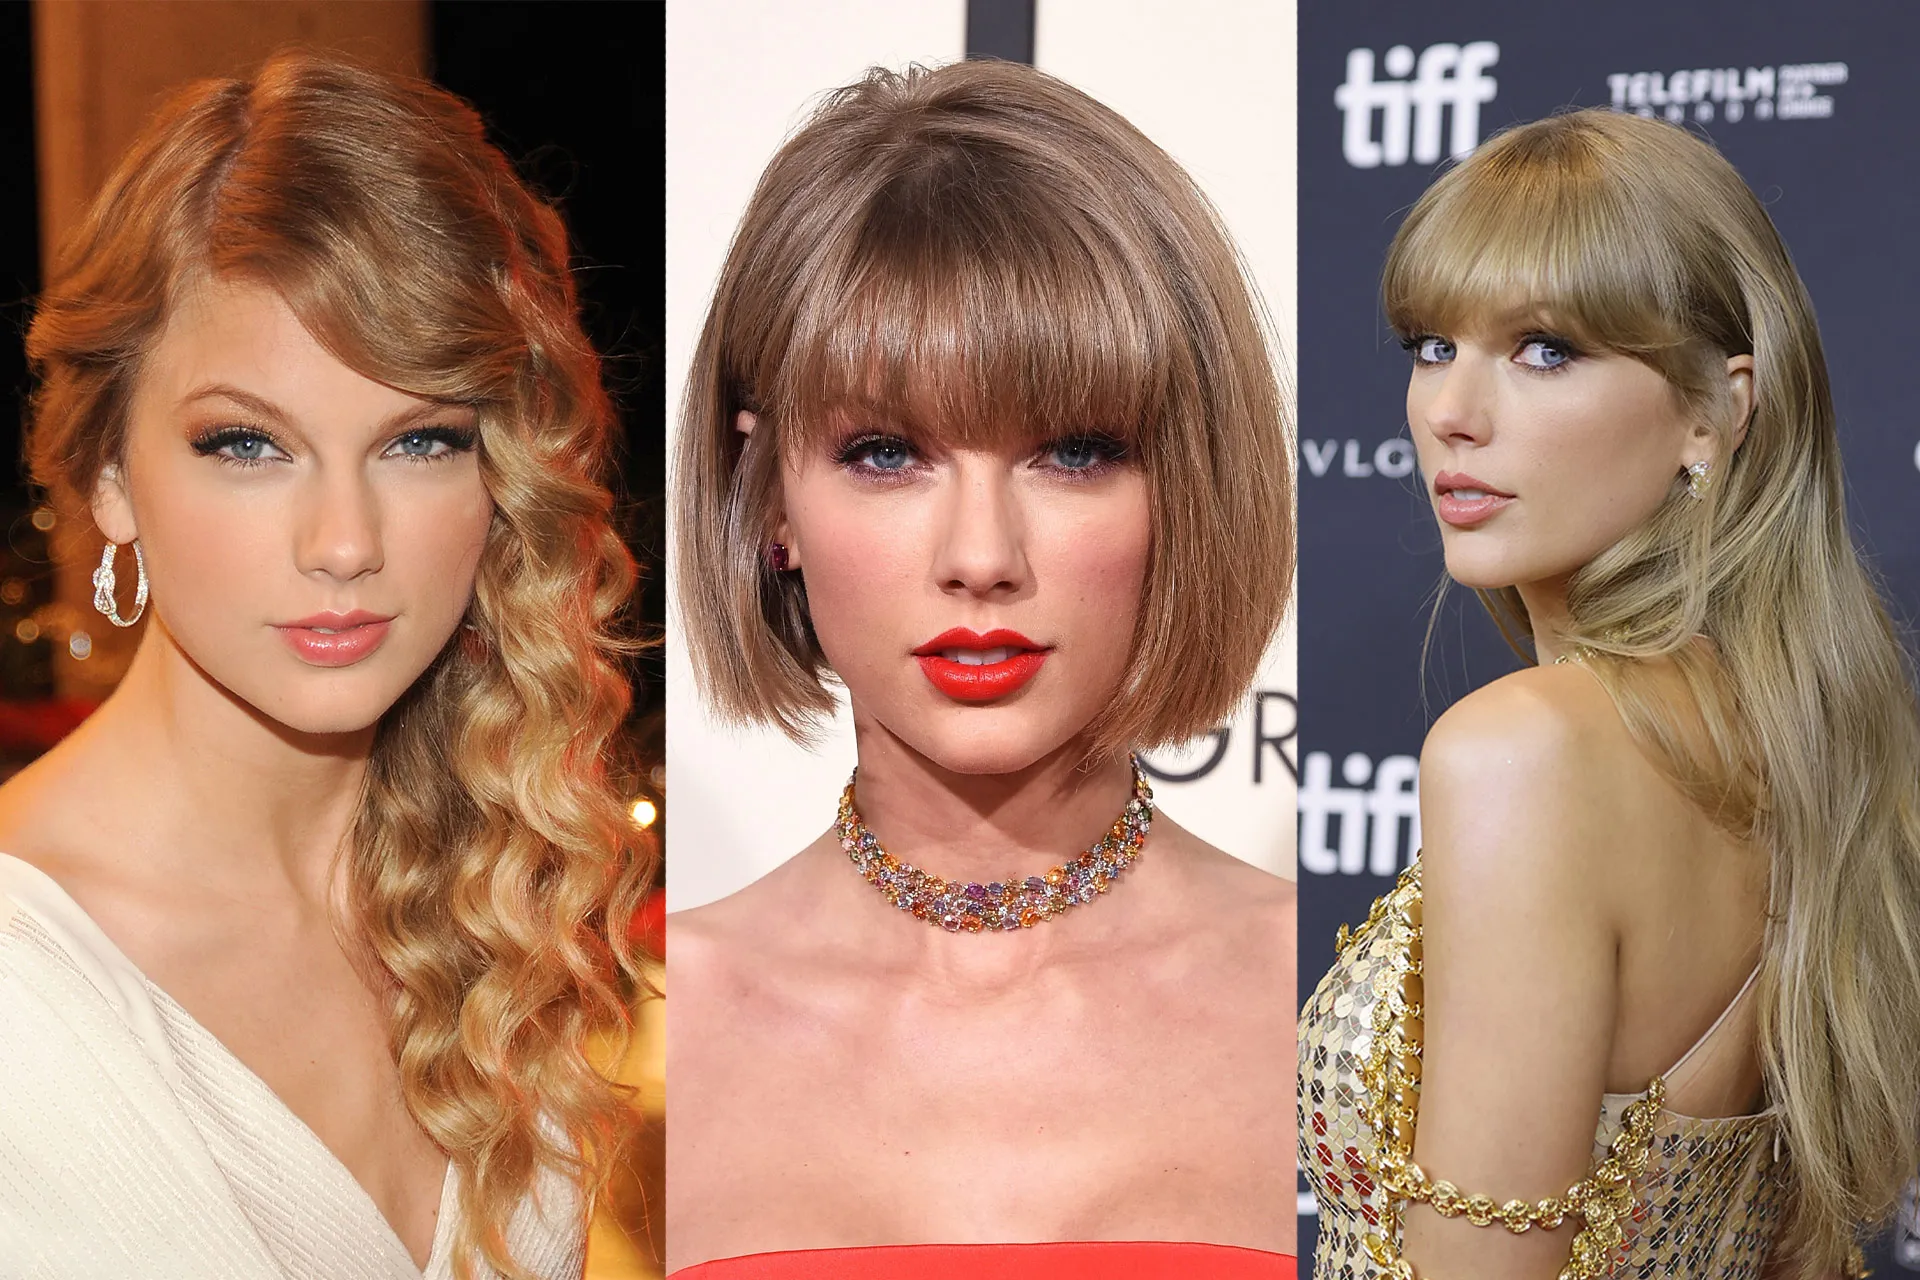 The Phenomenon of Taylor Swift: An Insightful Biography